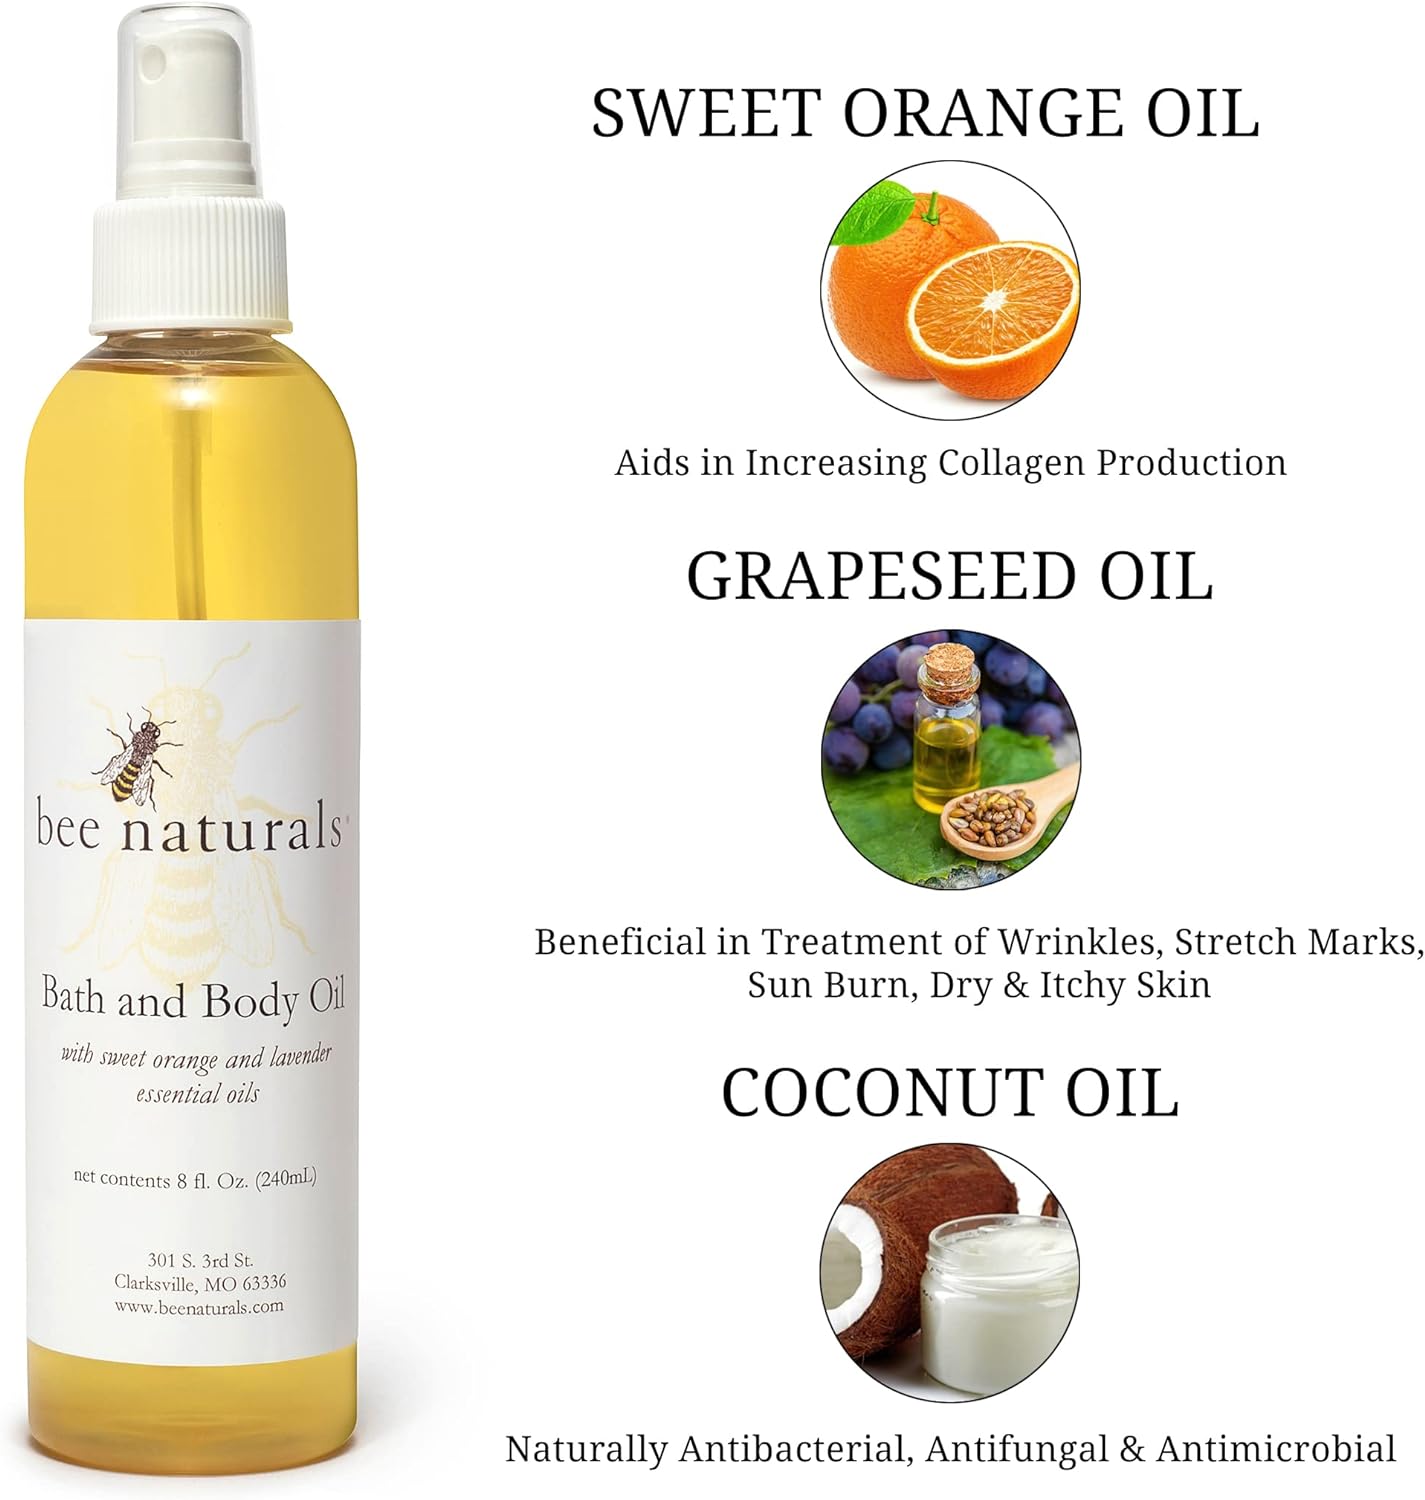 Bee Naturals, Bath & Body Oil, 8 fl oz : Beauty & Personal Care